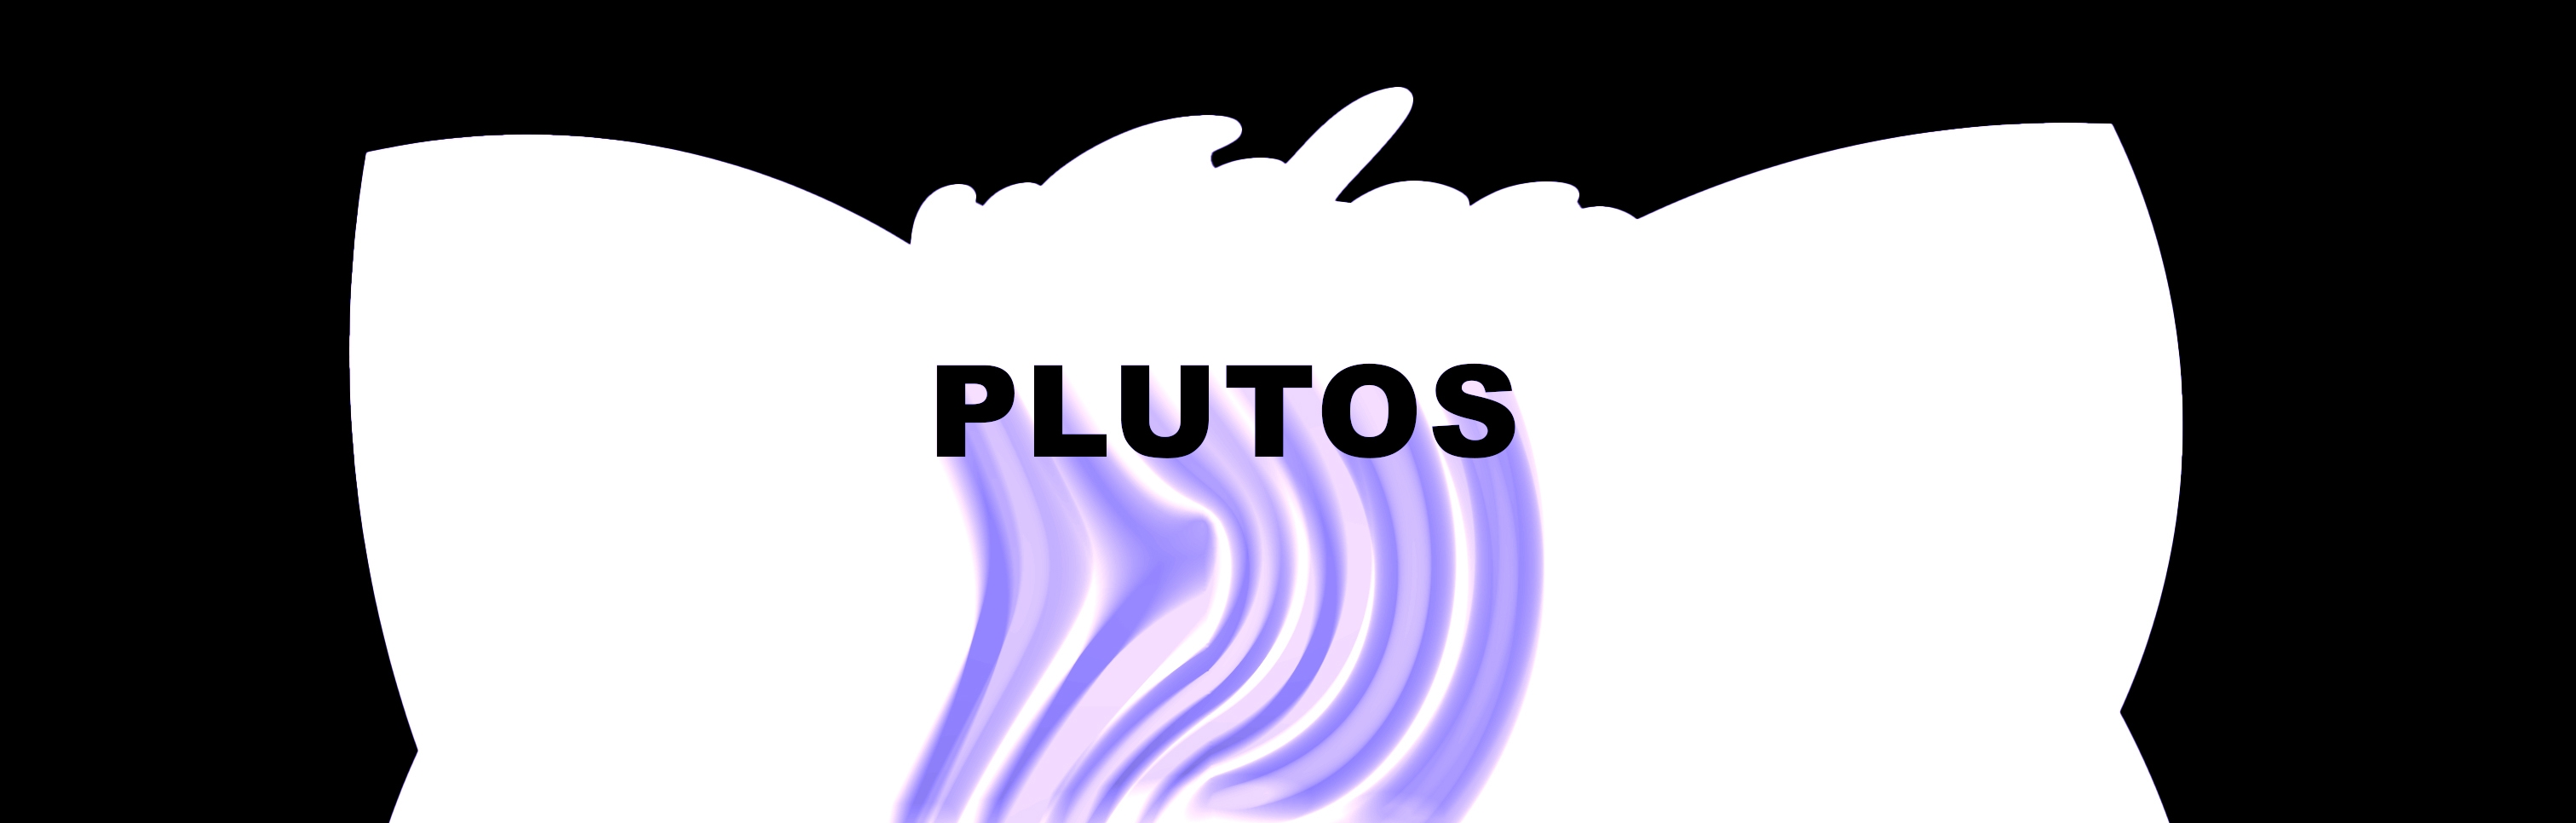 Plutos banner